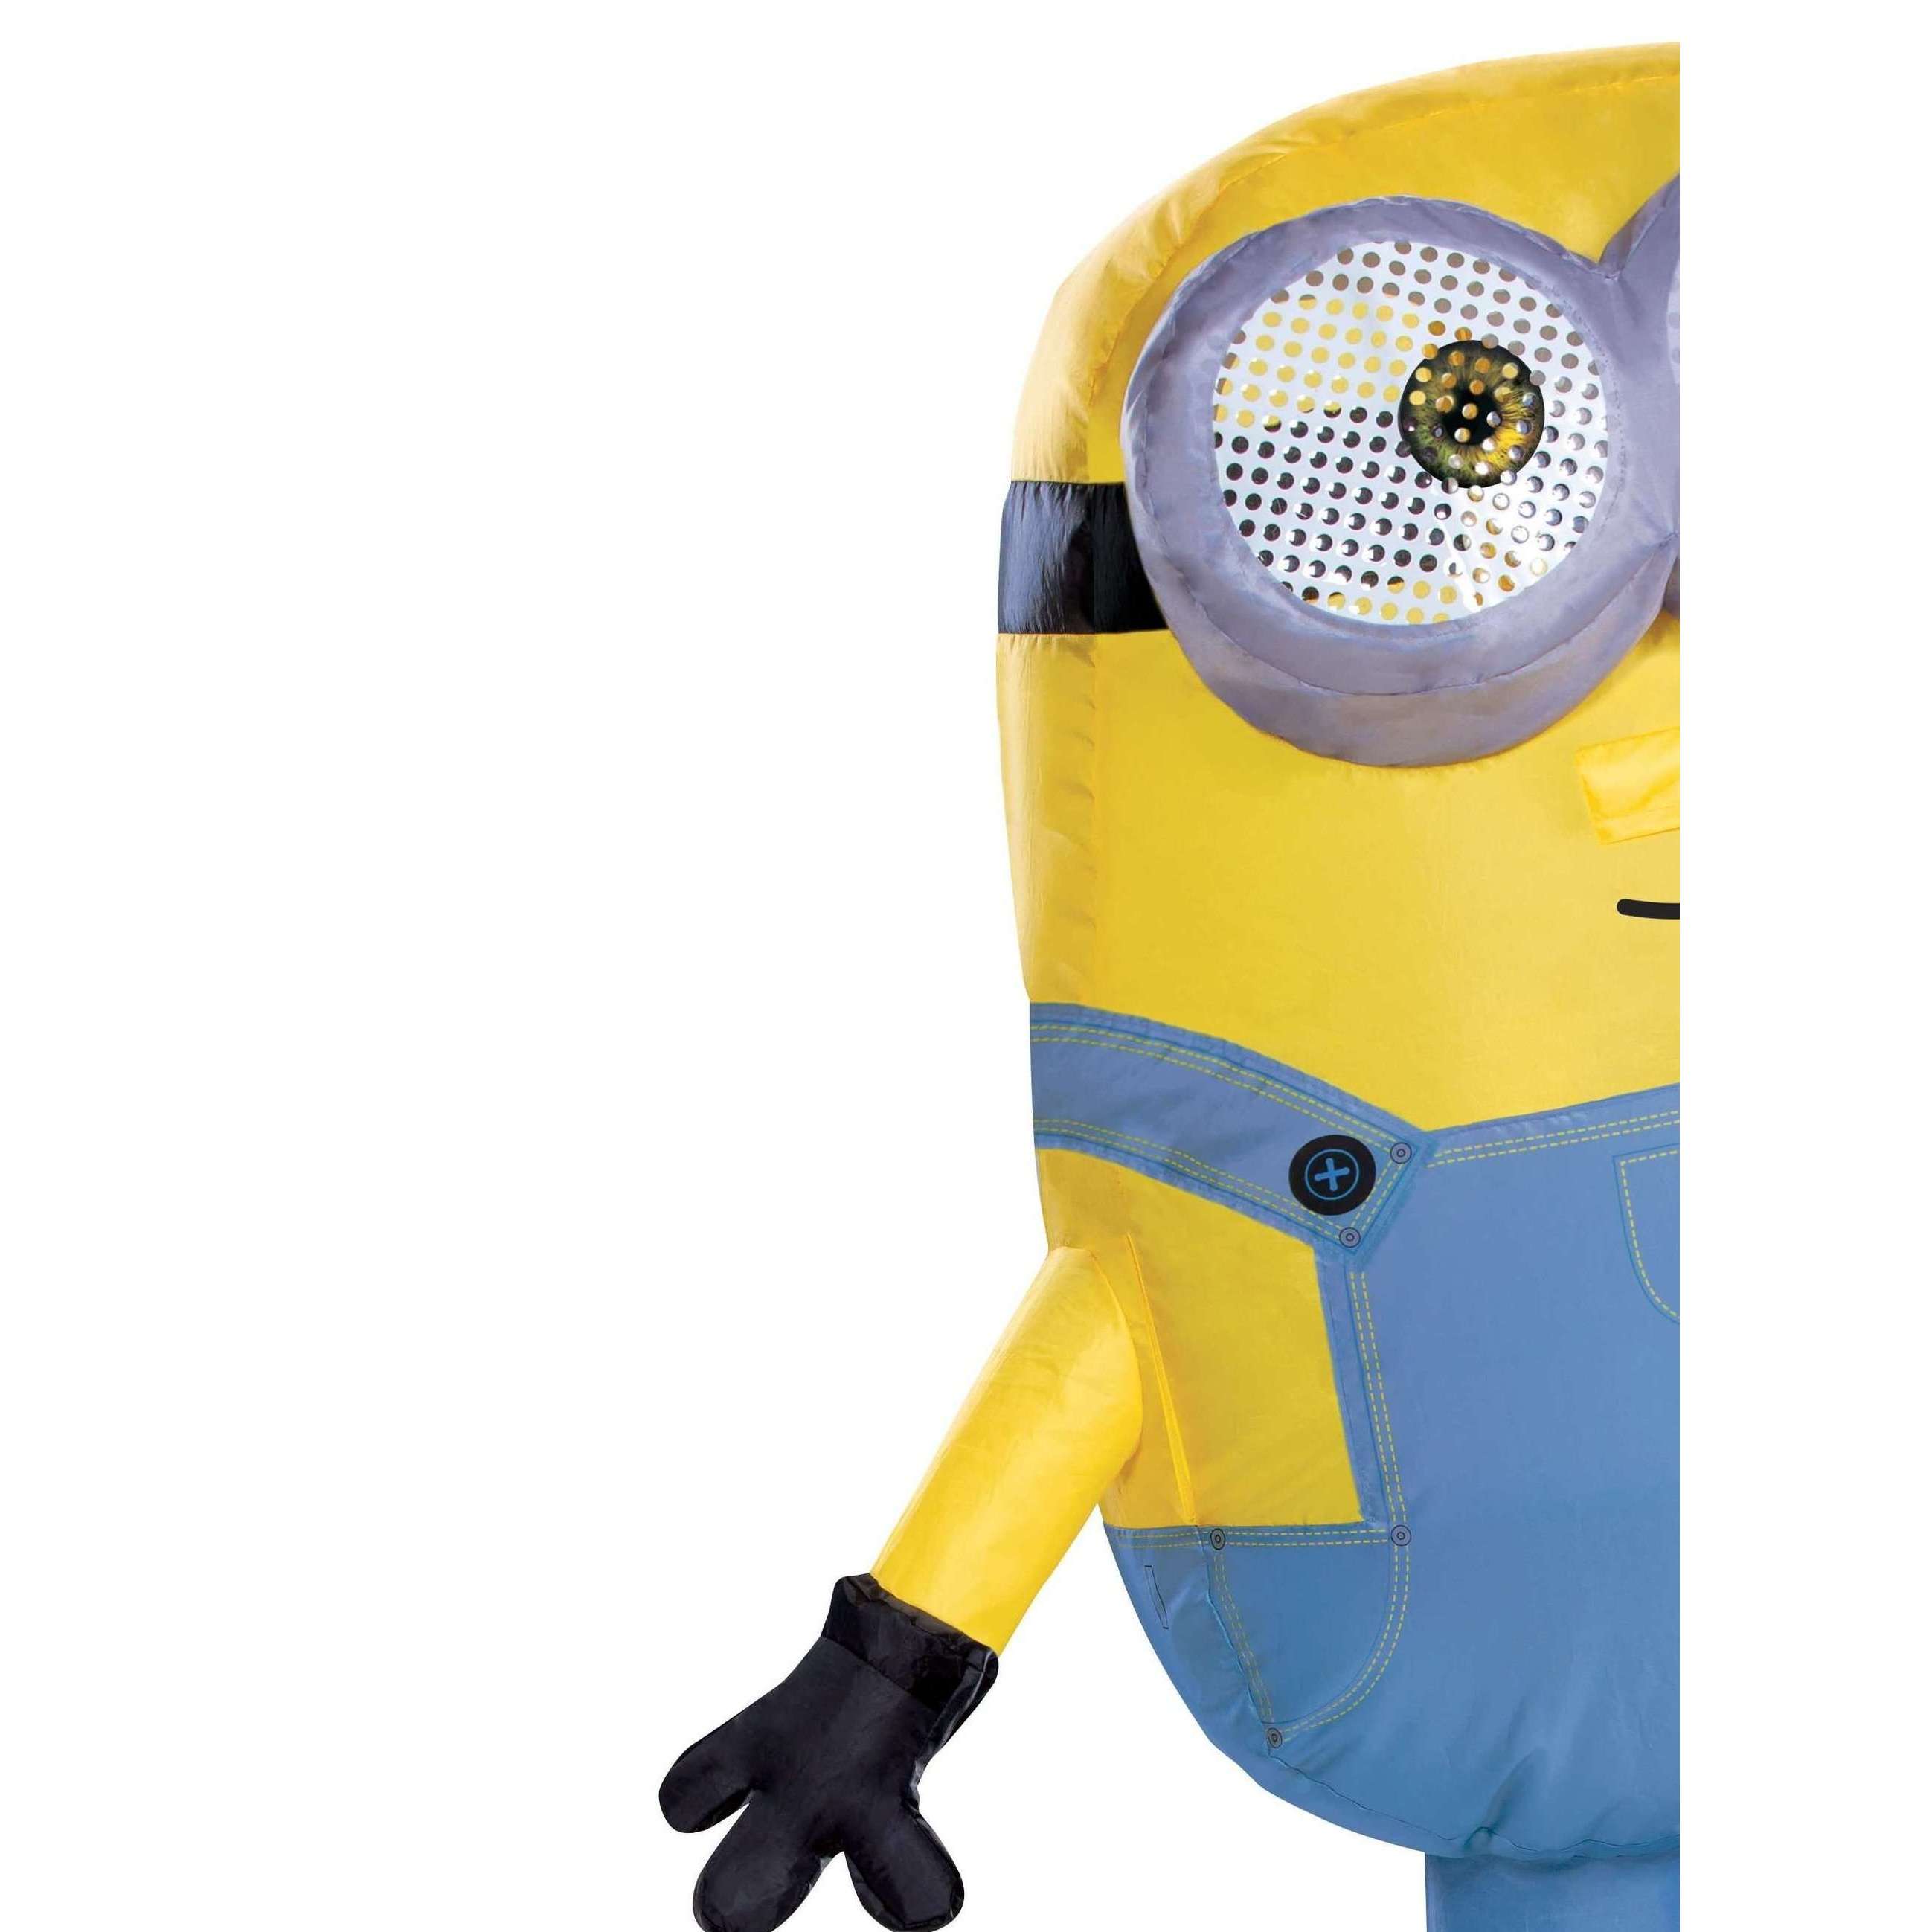 The Minions Kid's Inflatable Minion Bob Costume